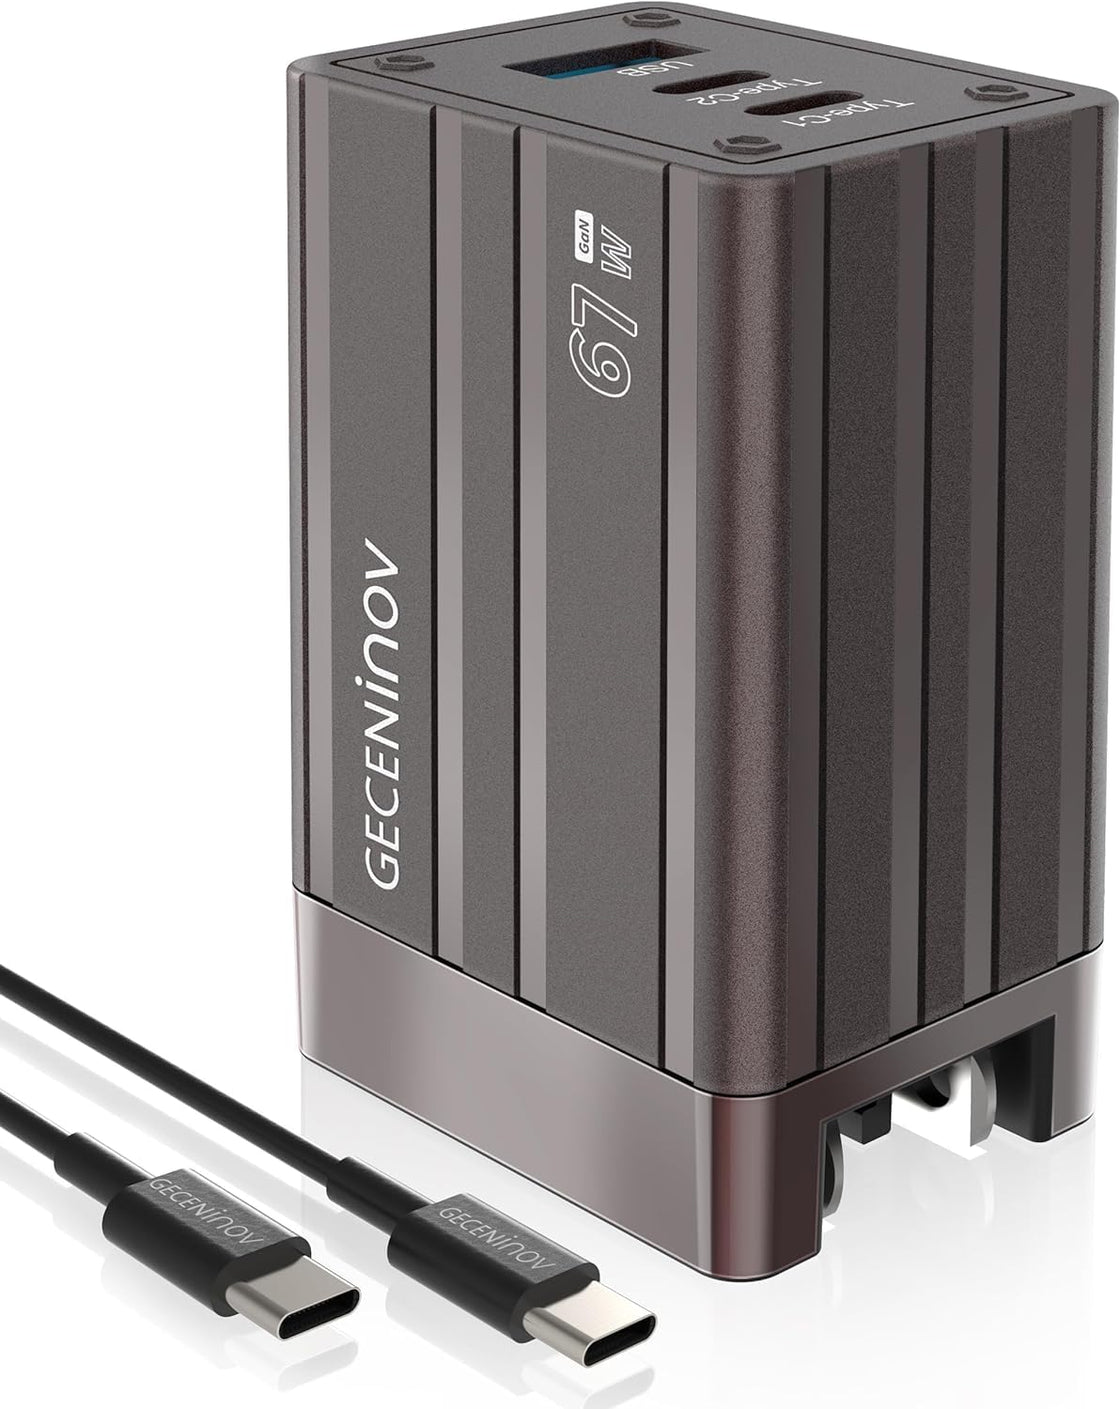 GECENinov 67w USB C GaN Fast Charger-3 Ports Charger